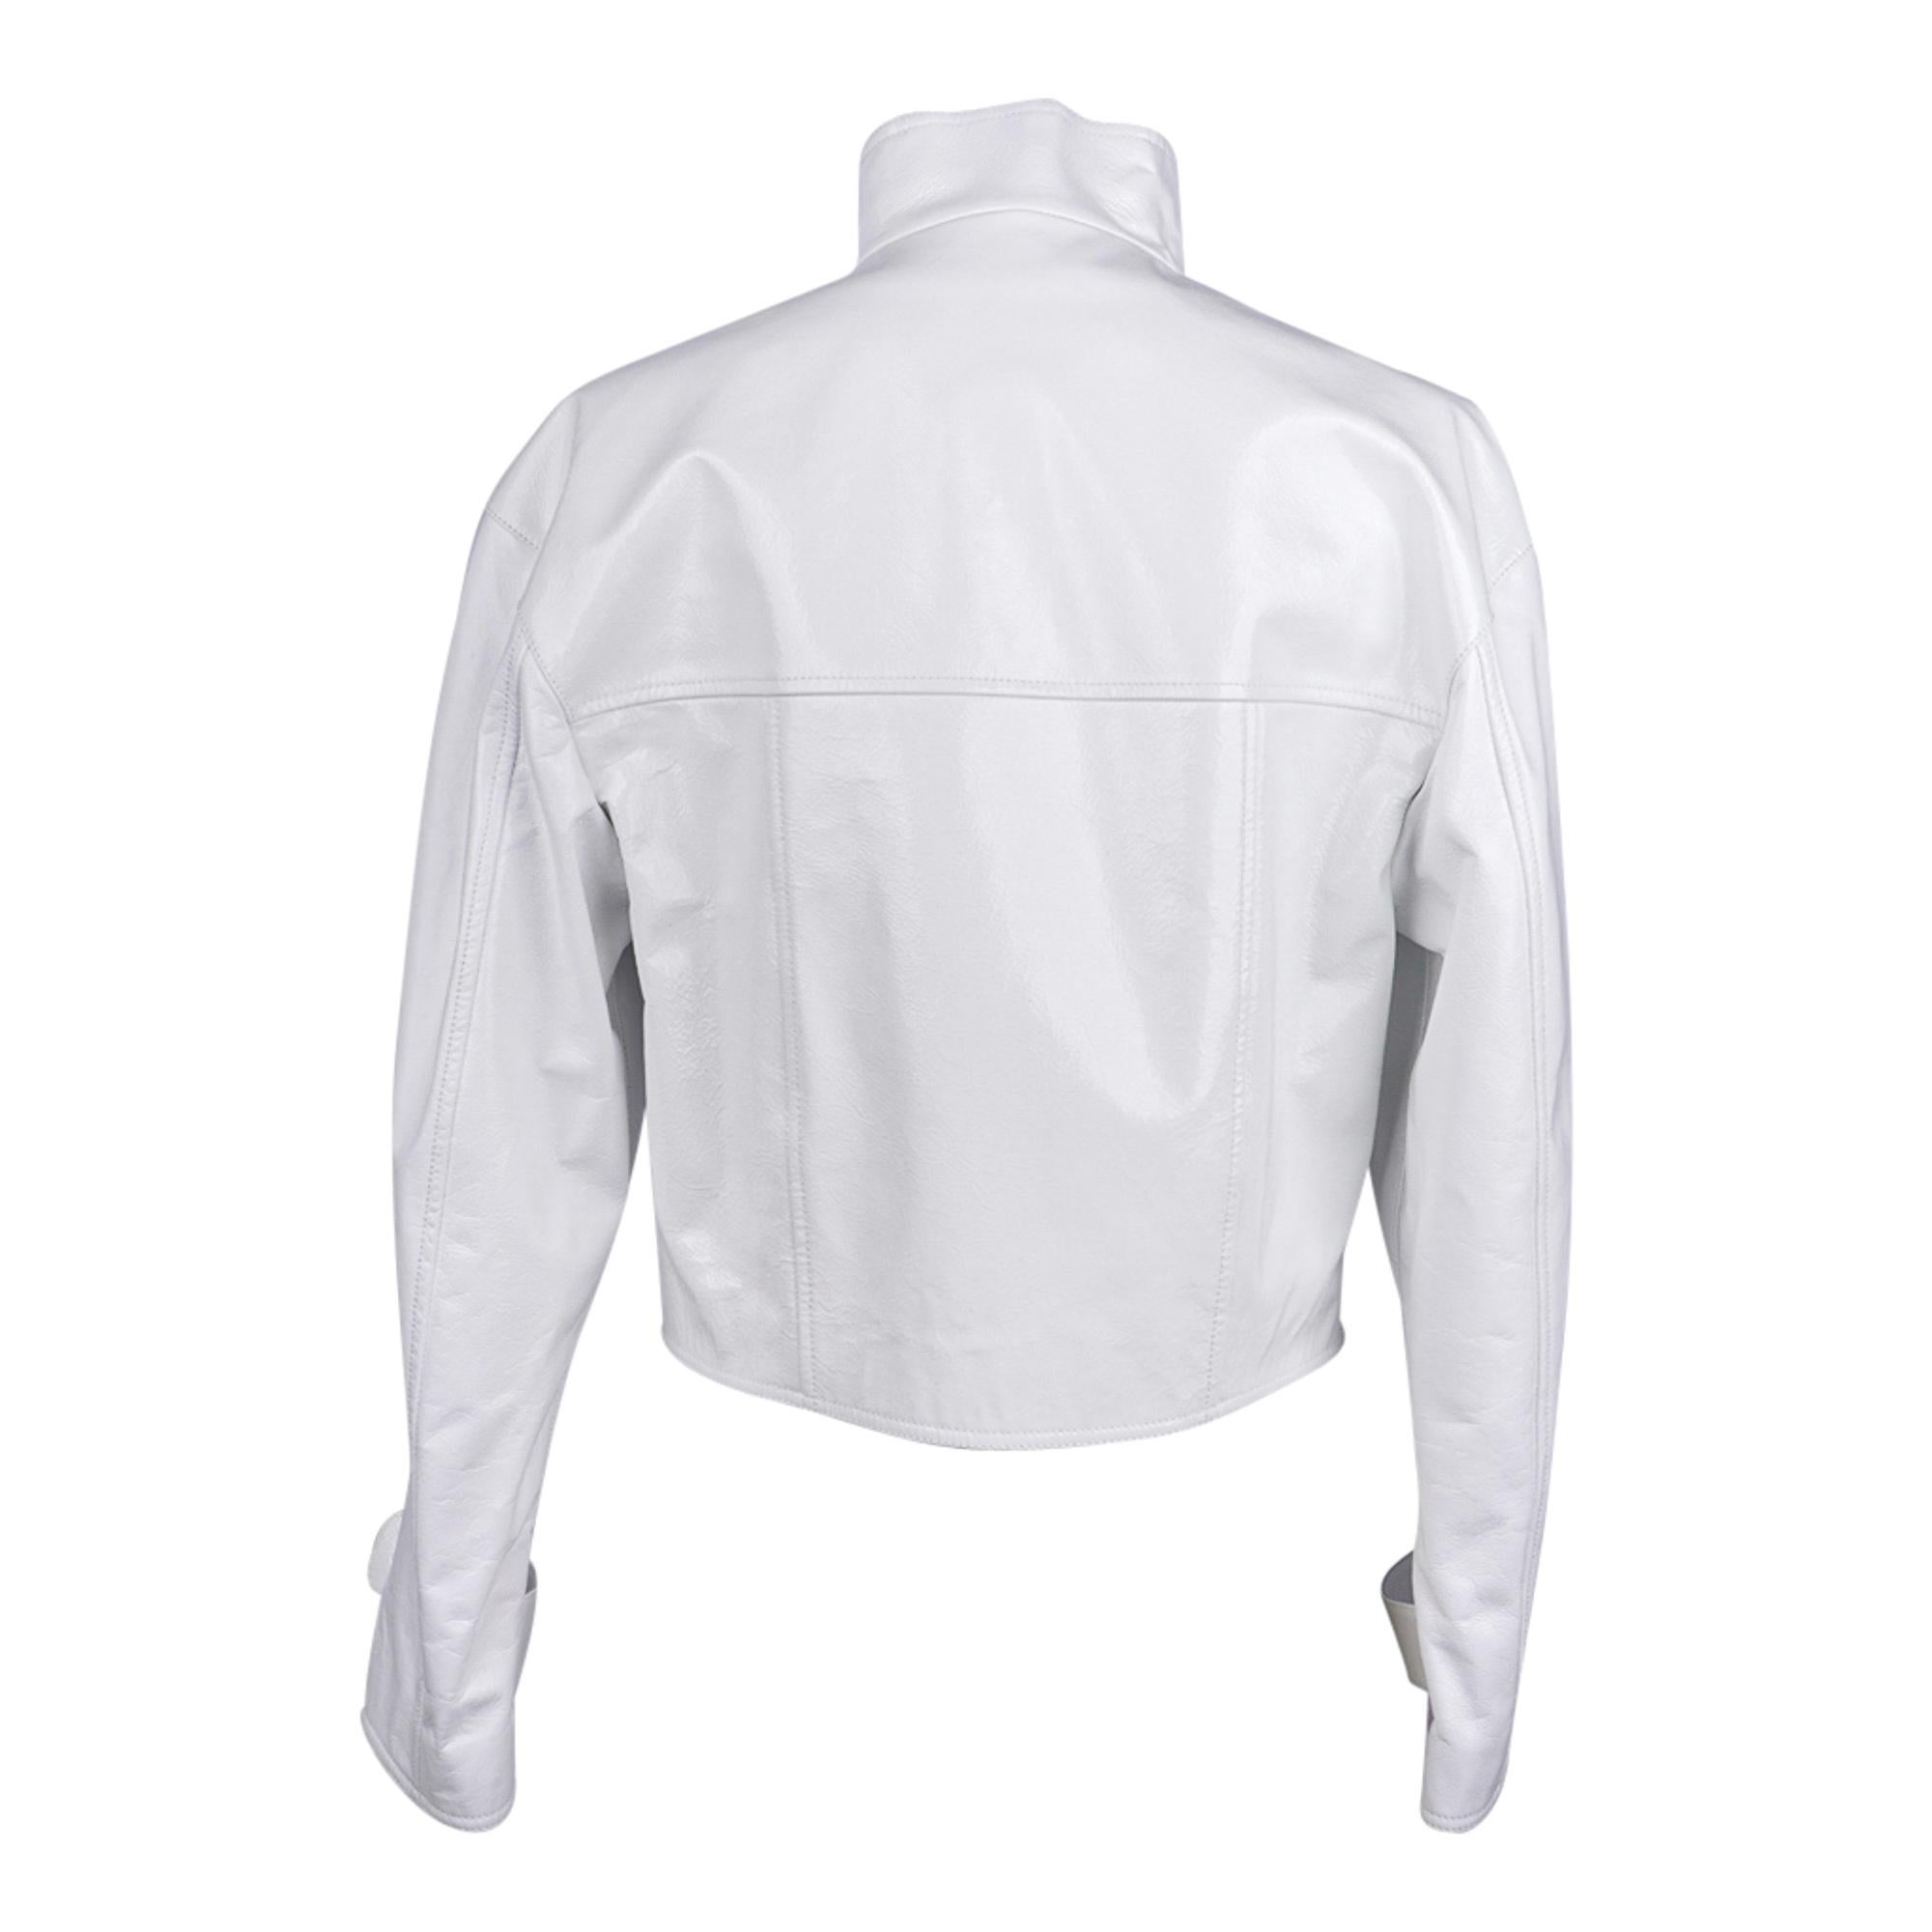 Chanel 2020-21FW Jacket White Patent Leather Short Biker Style 36 / 4 ...